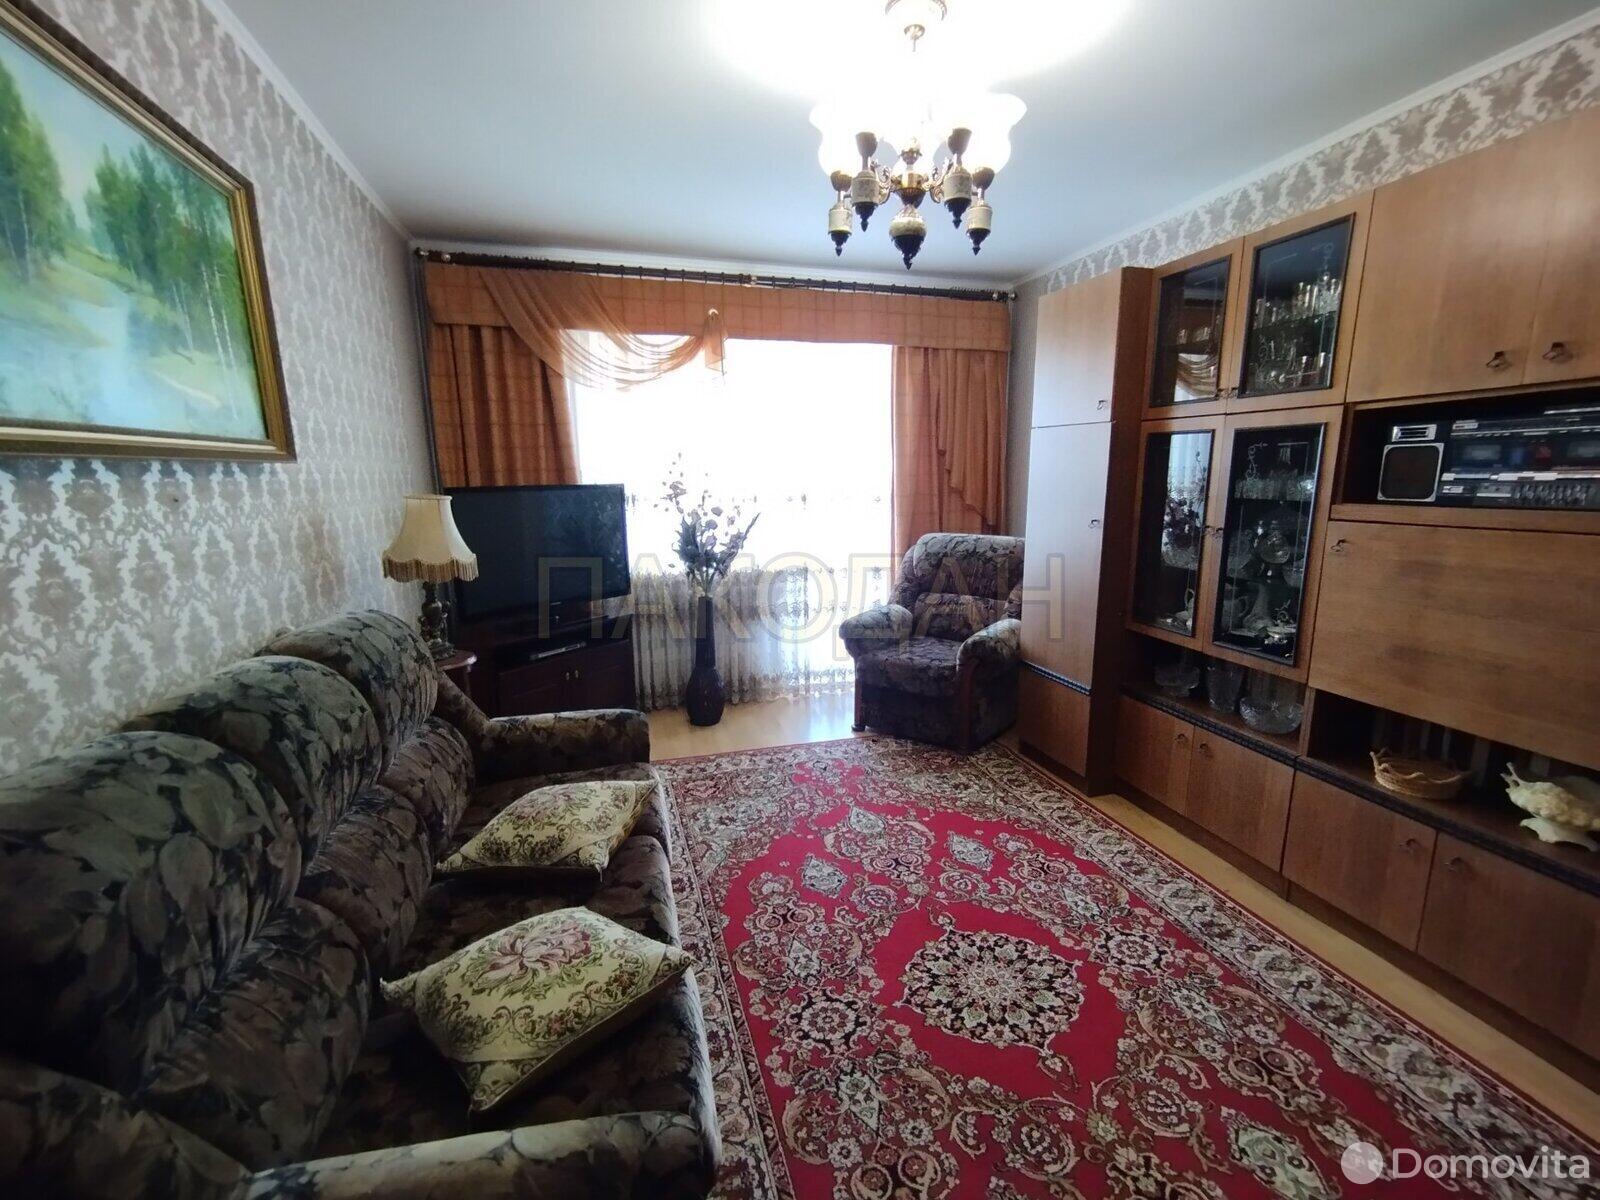 квартира, Барановичи, ул. Репина, стоимость продажи 112 581 р.